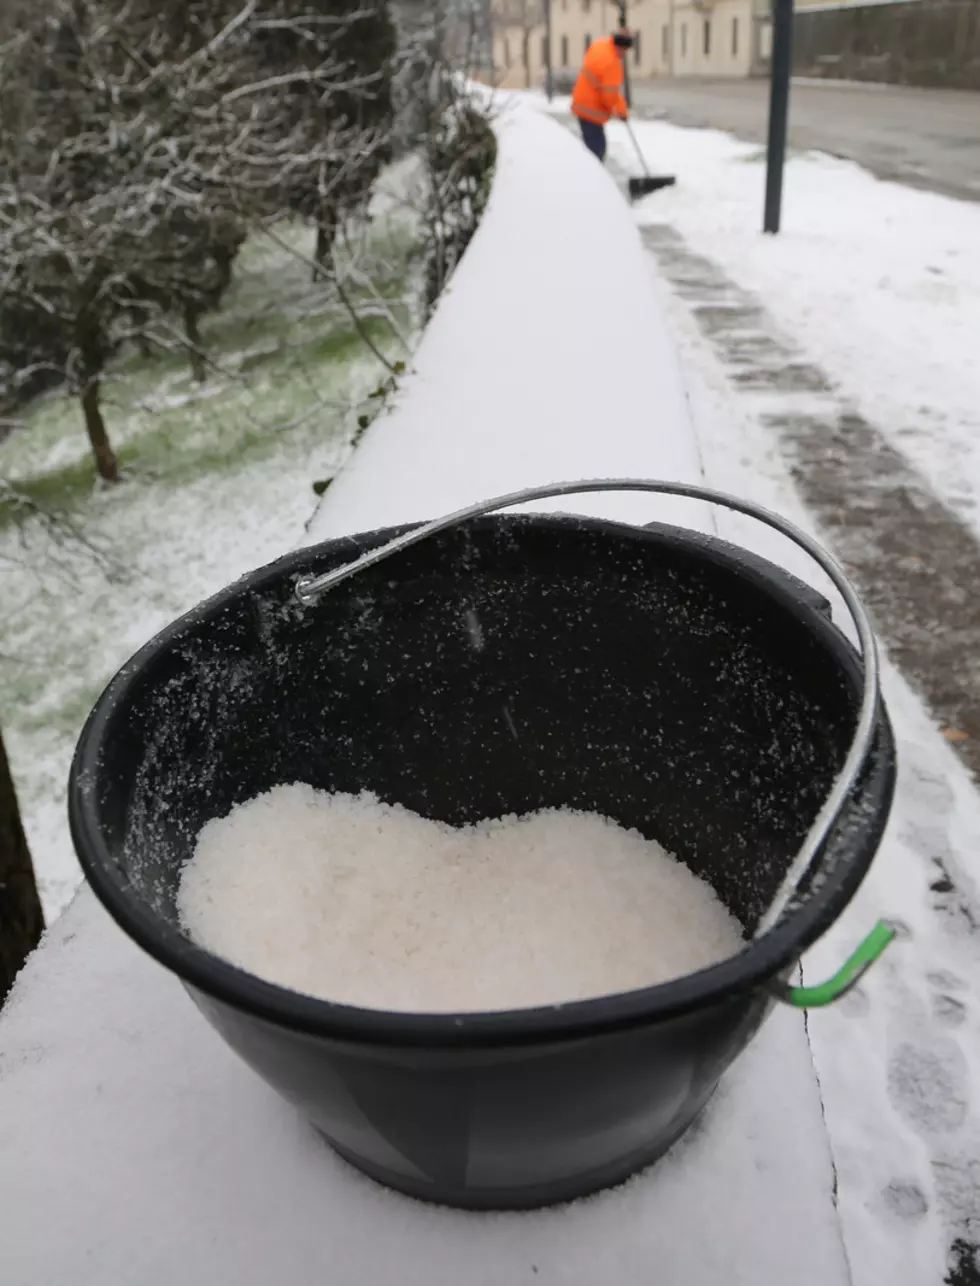 Seven Better Ways to Melt That Winter Snow &#038; Ice Than Salt